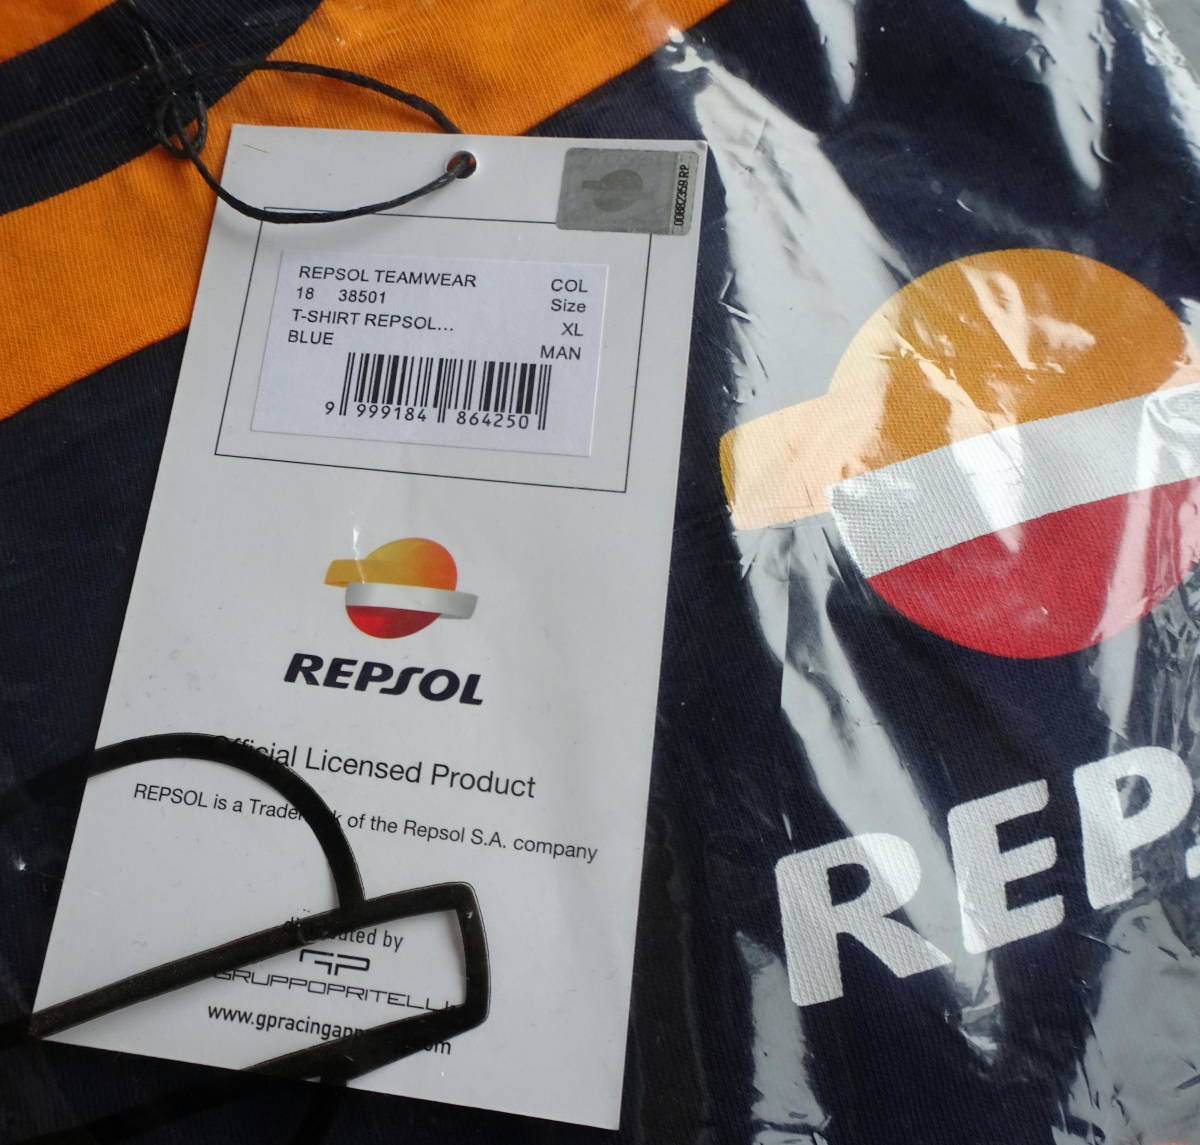  Repsol Honda рейсинг футболка (XL) размер +#93 марок * maru kes рубашка-поло (XXL) 2 надеты комплект Repsol Honda RACING HRC MotoGP RC213V